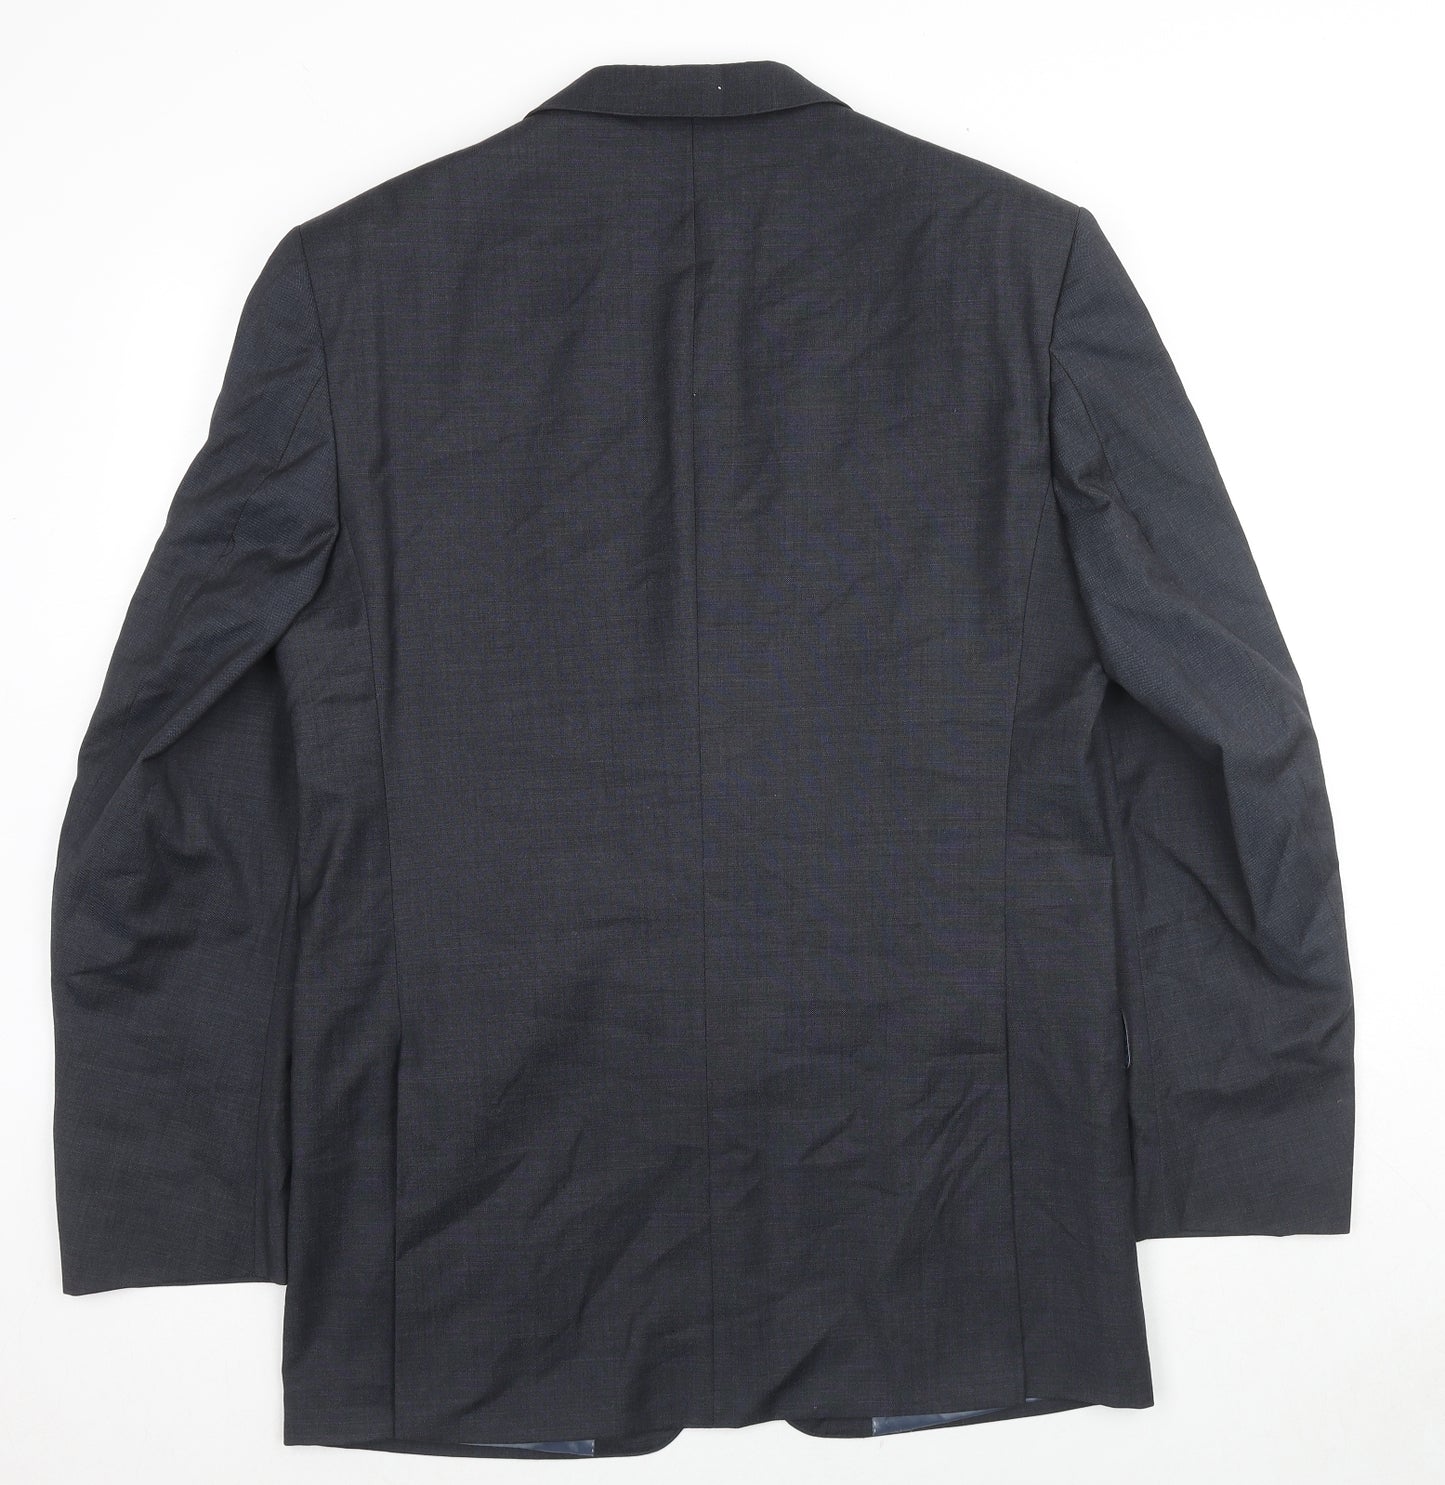 Balmain Mens Grey Wool Jacket Suit Jacket Size 40 Regular